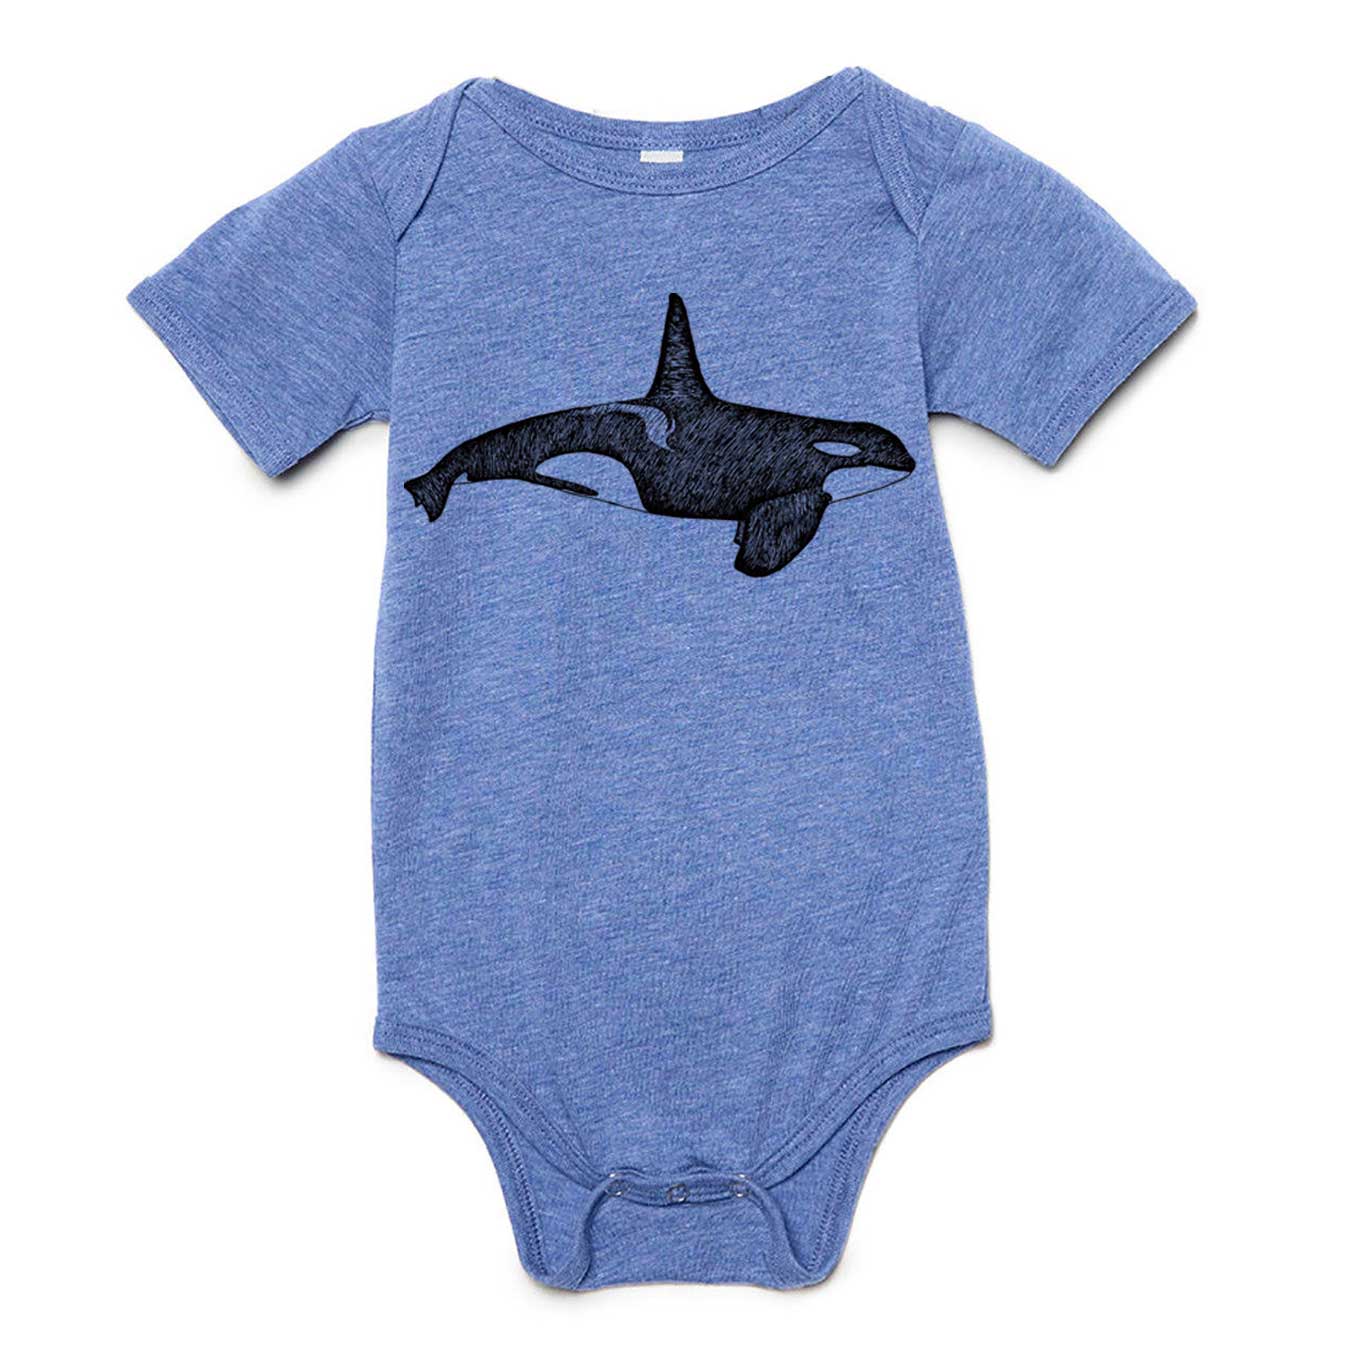 Orca Whale - Infant Triblend Onesie (Blue) Infant_Printed Bella + Canvas 